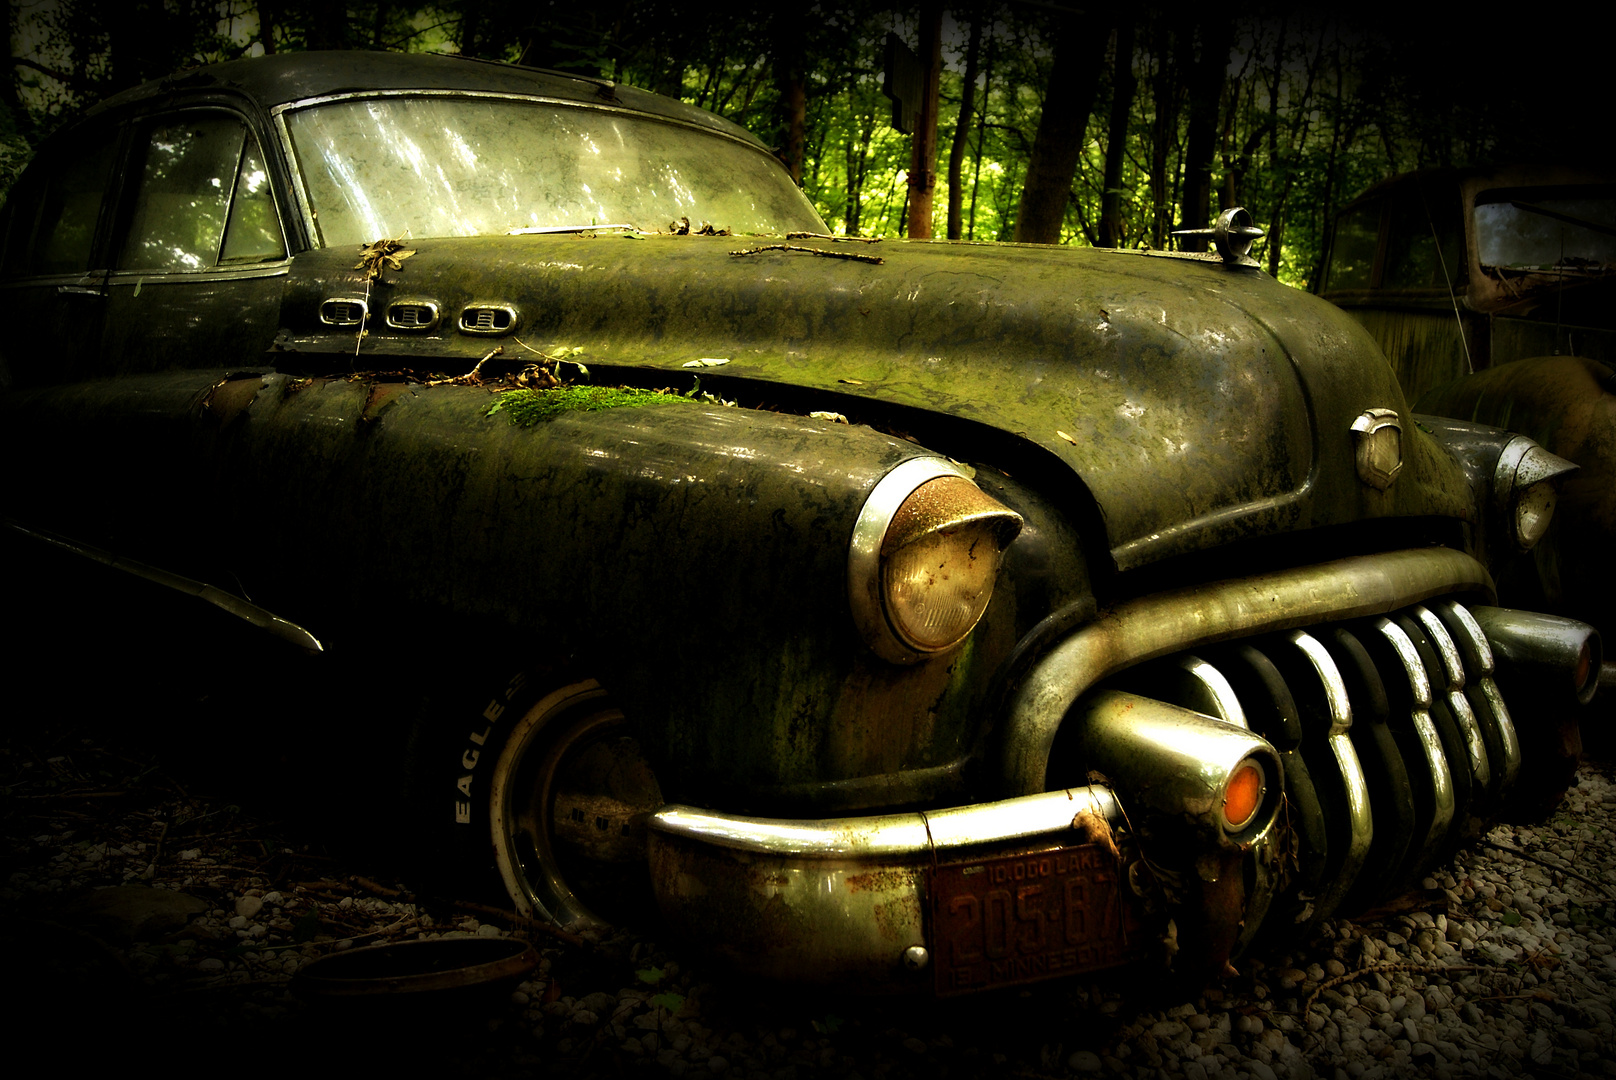 Old Buick. Der mit dem bösen Blick